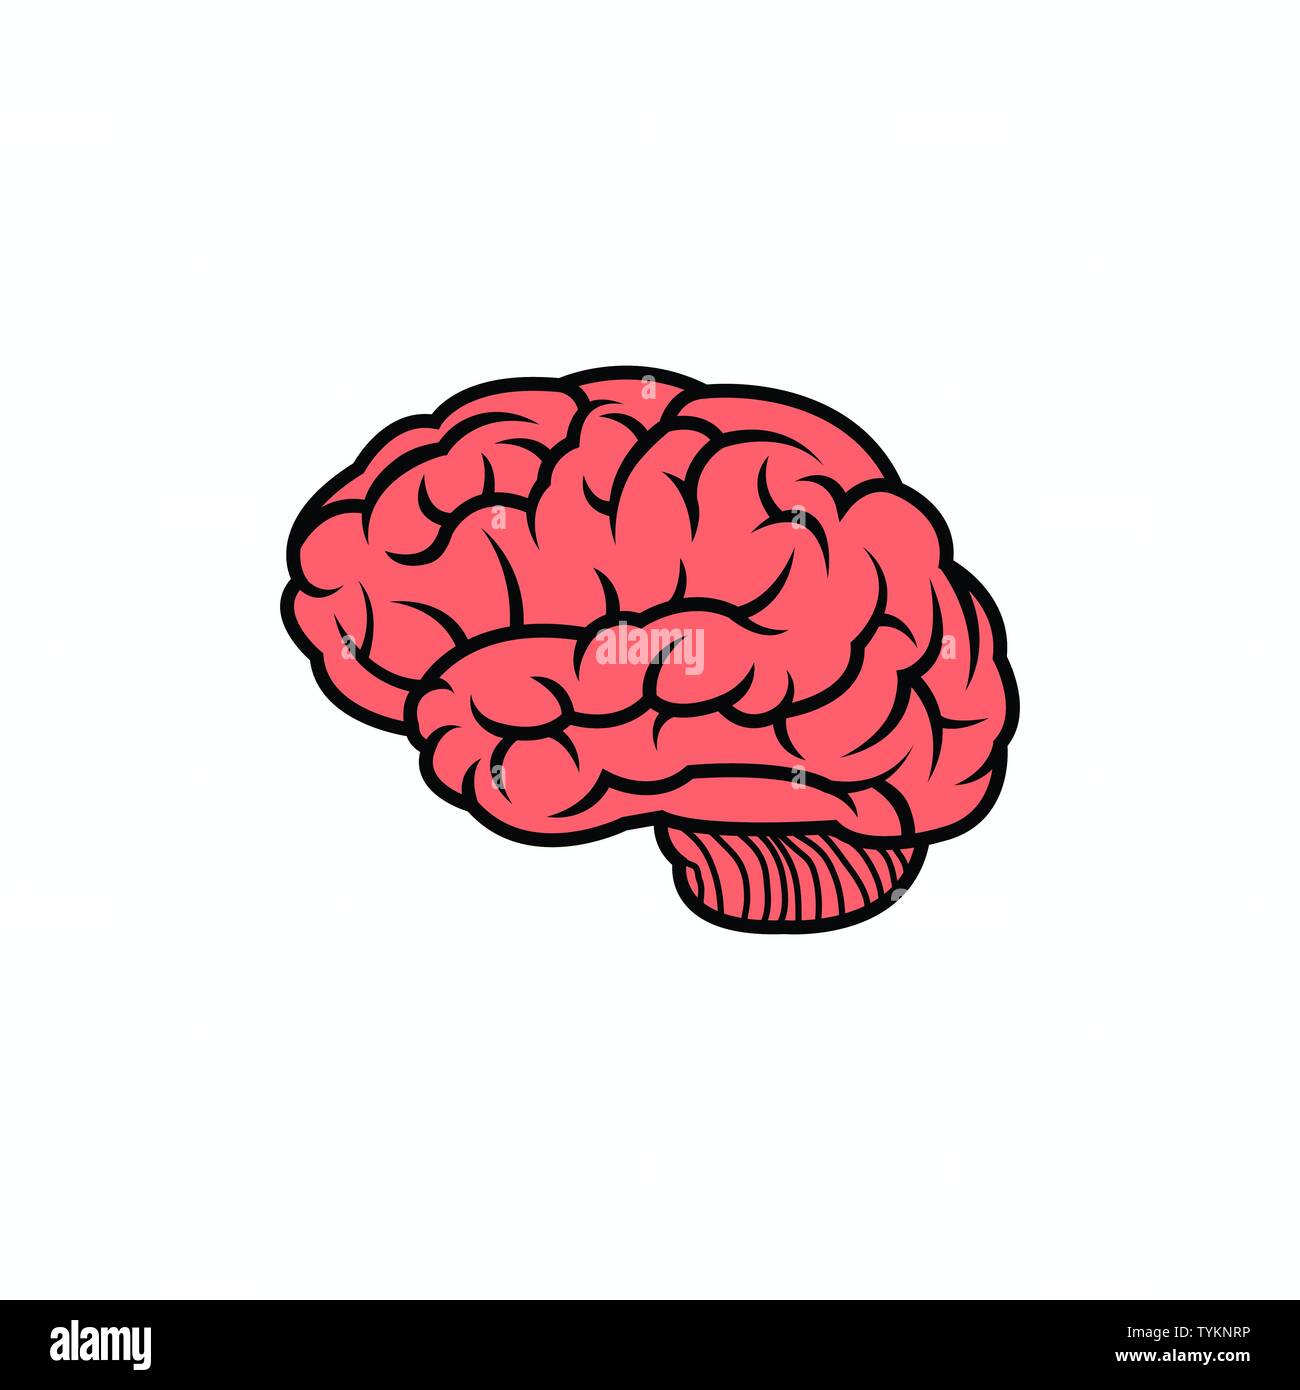 https://c8.alamy.com/comp/TYKNRP/abstract-human-brain-logo-design-template-TYKNRP.jpg